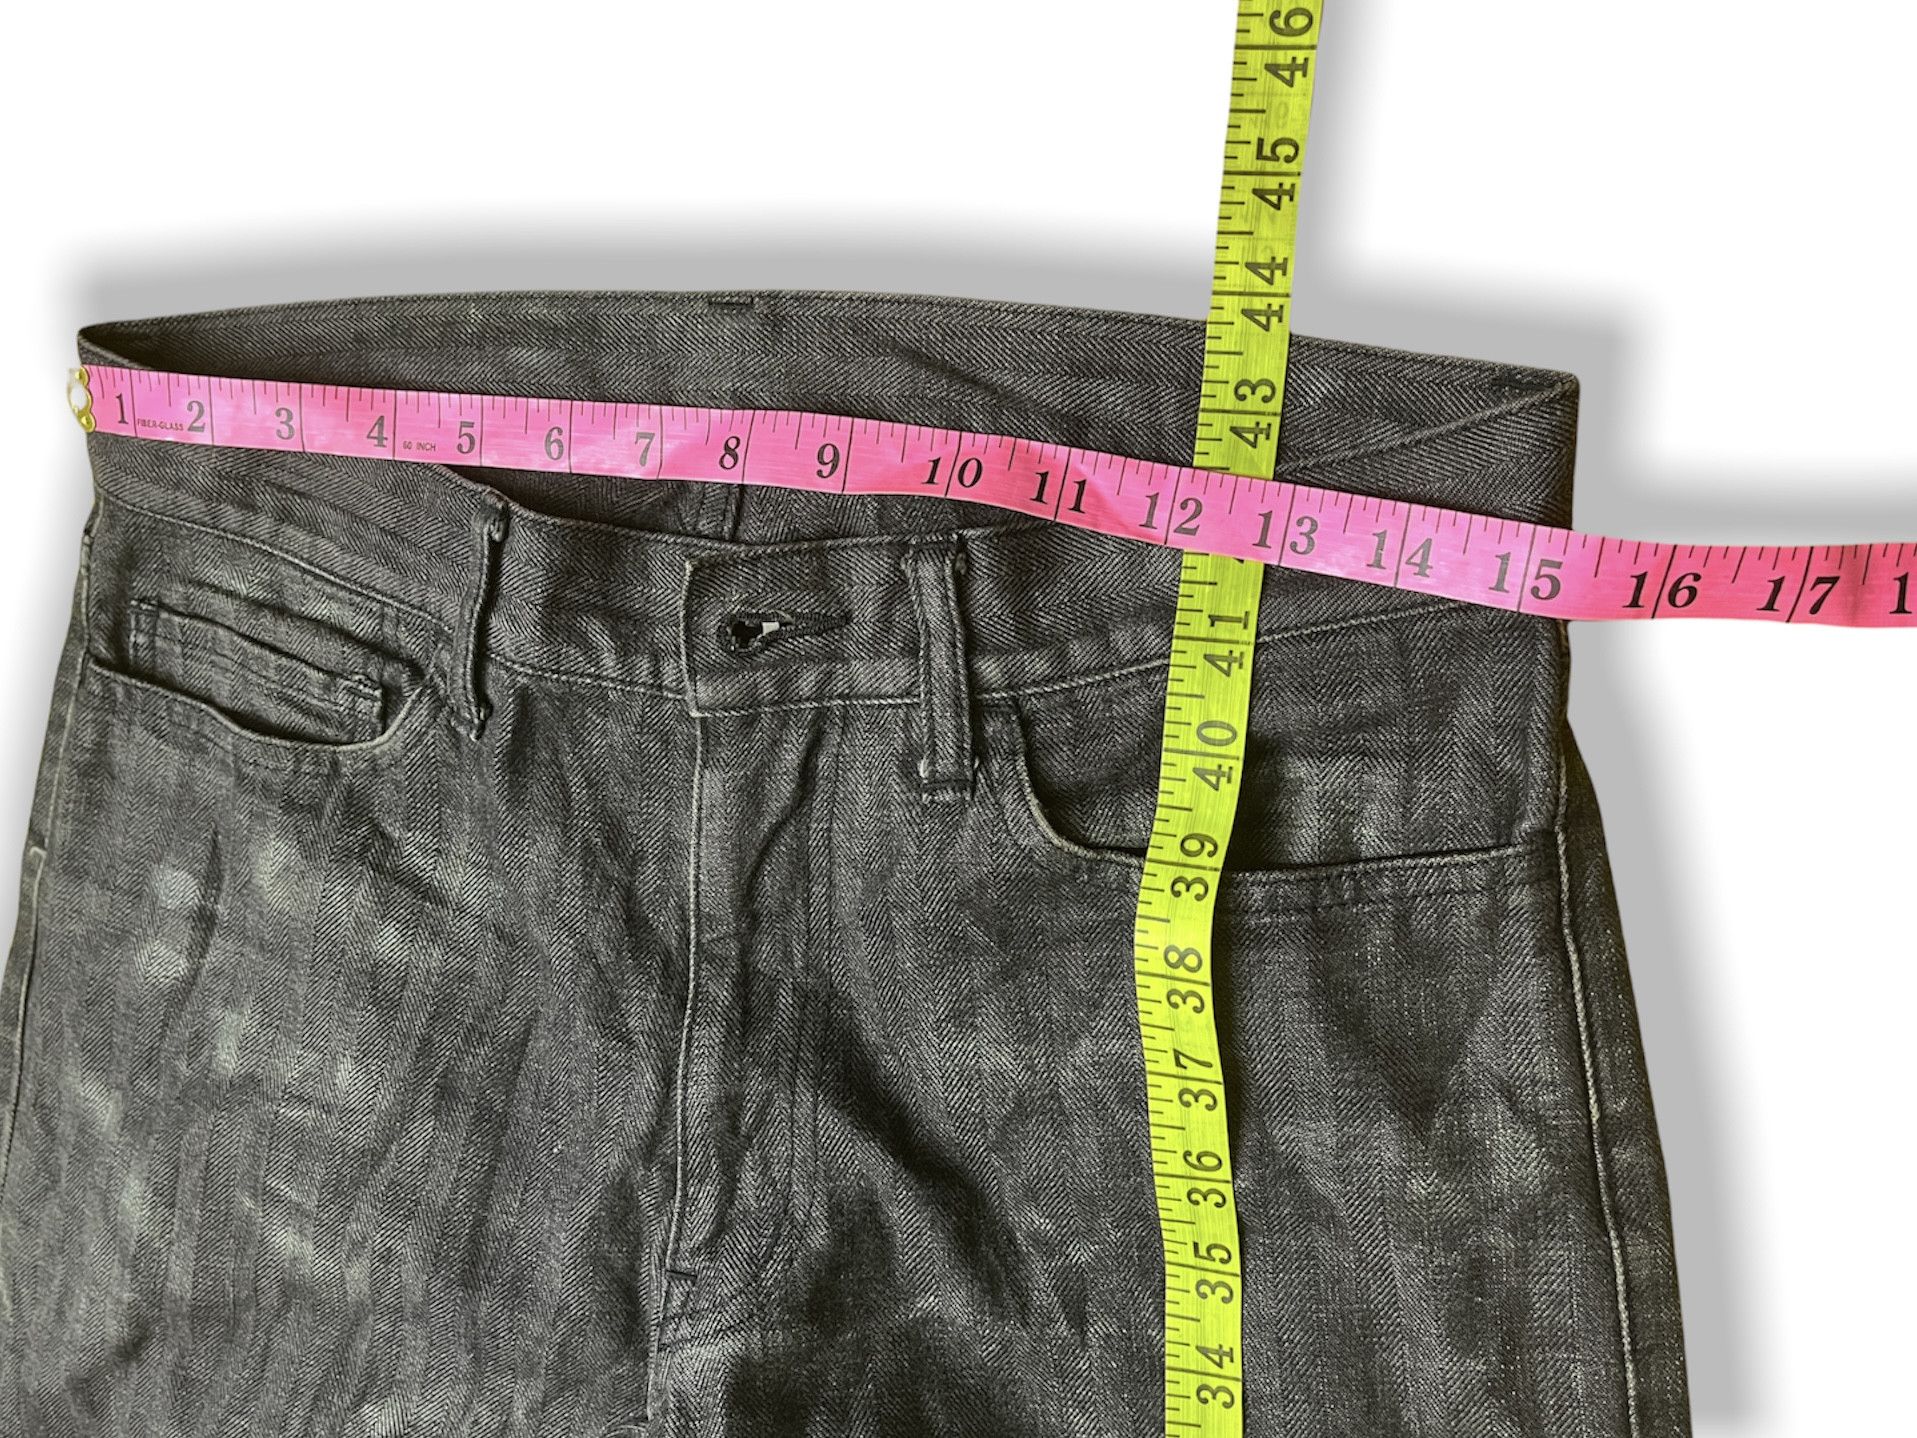 Japanese Brand - Distressed EDGE RUPERT Flare Denim Jeans HISTERIC STYLE - 2